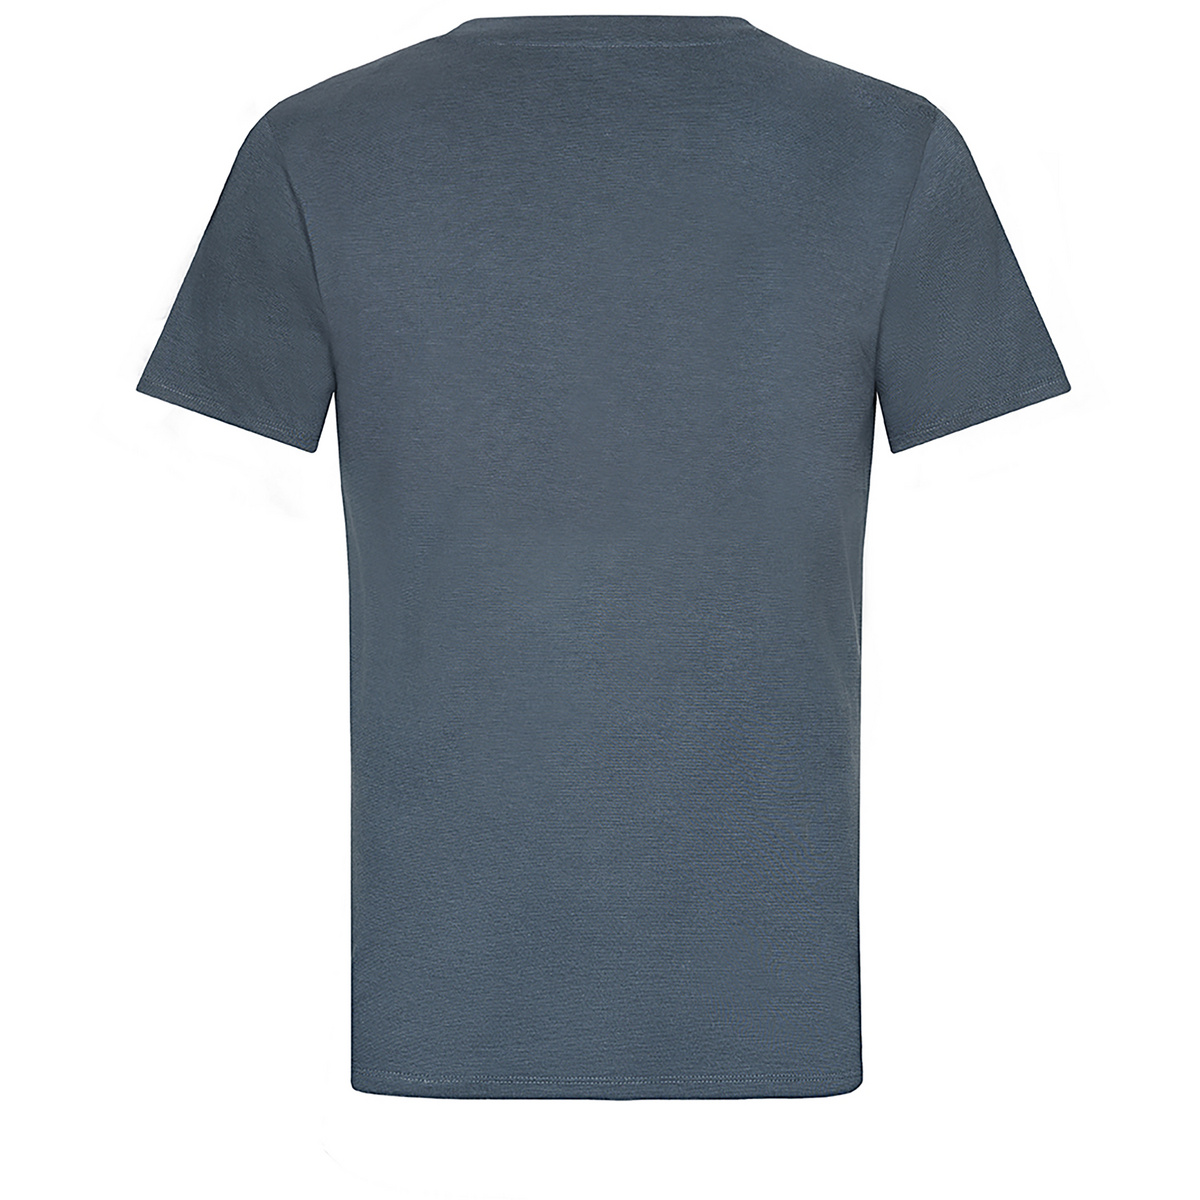 LACD Herren Bellavista T-Shirt 2